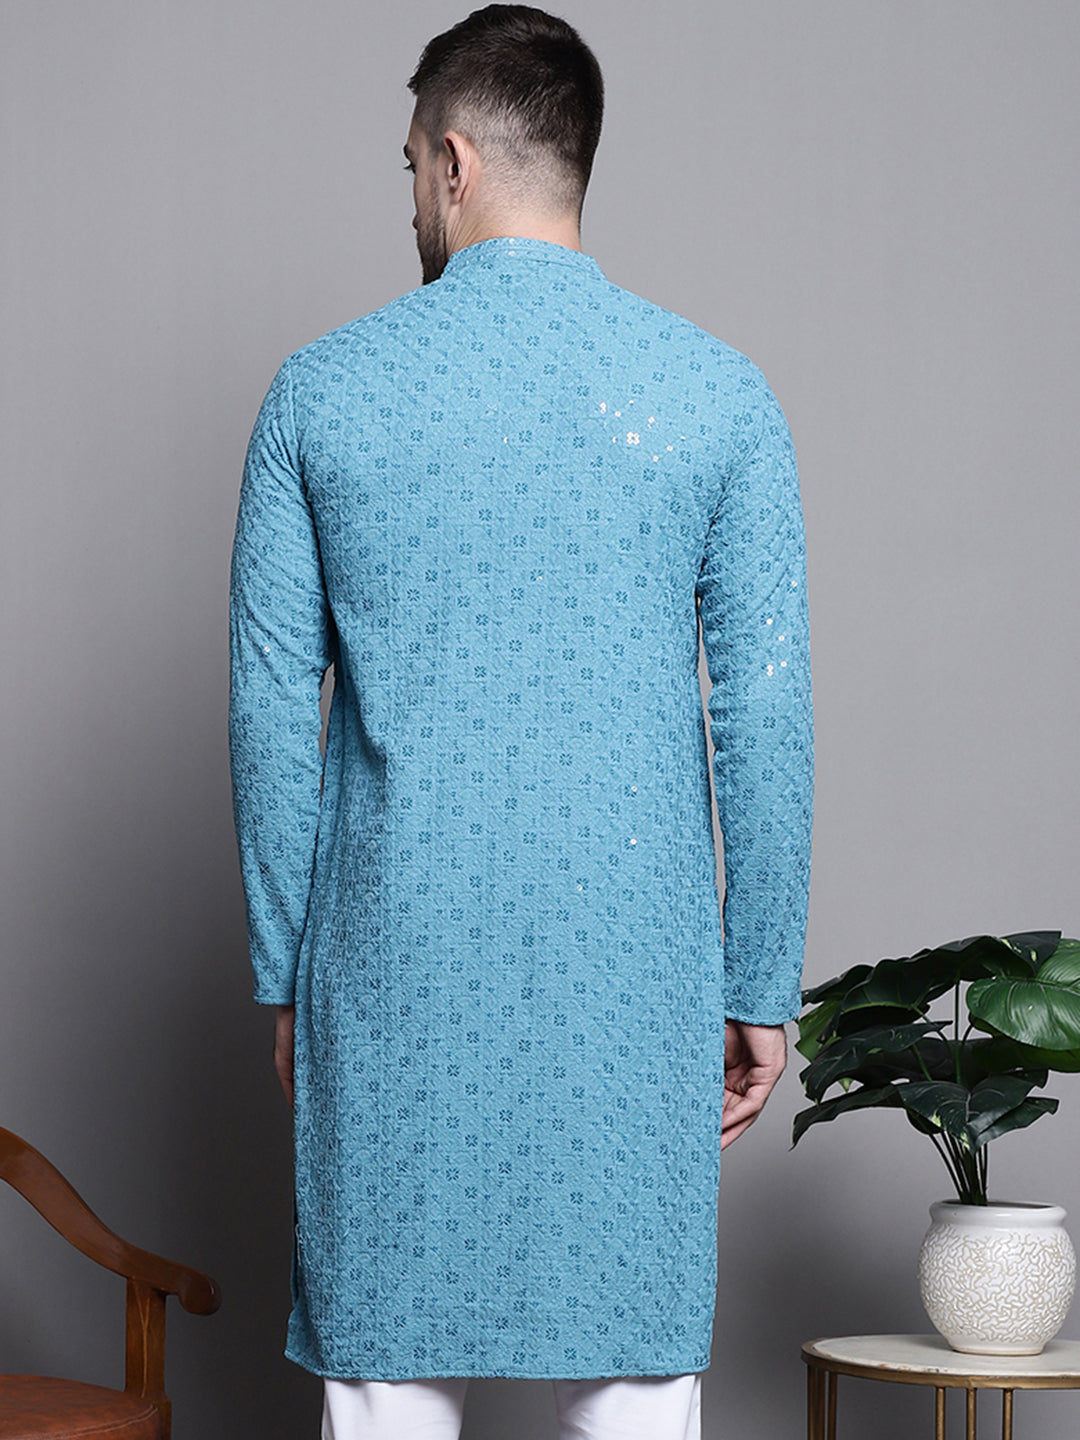 Men's Blue Sequin Embroidered Cotton Kurta